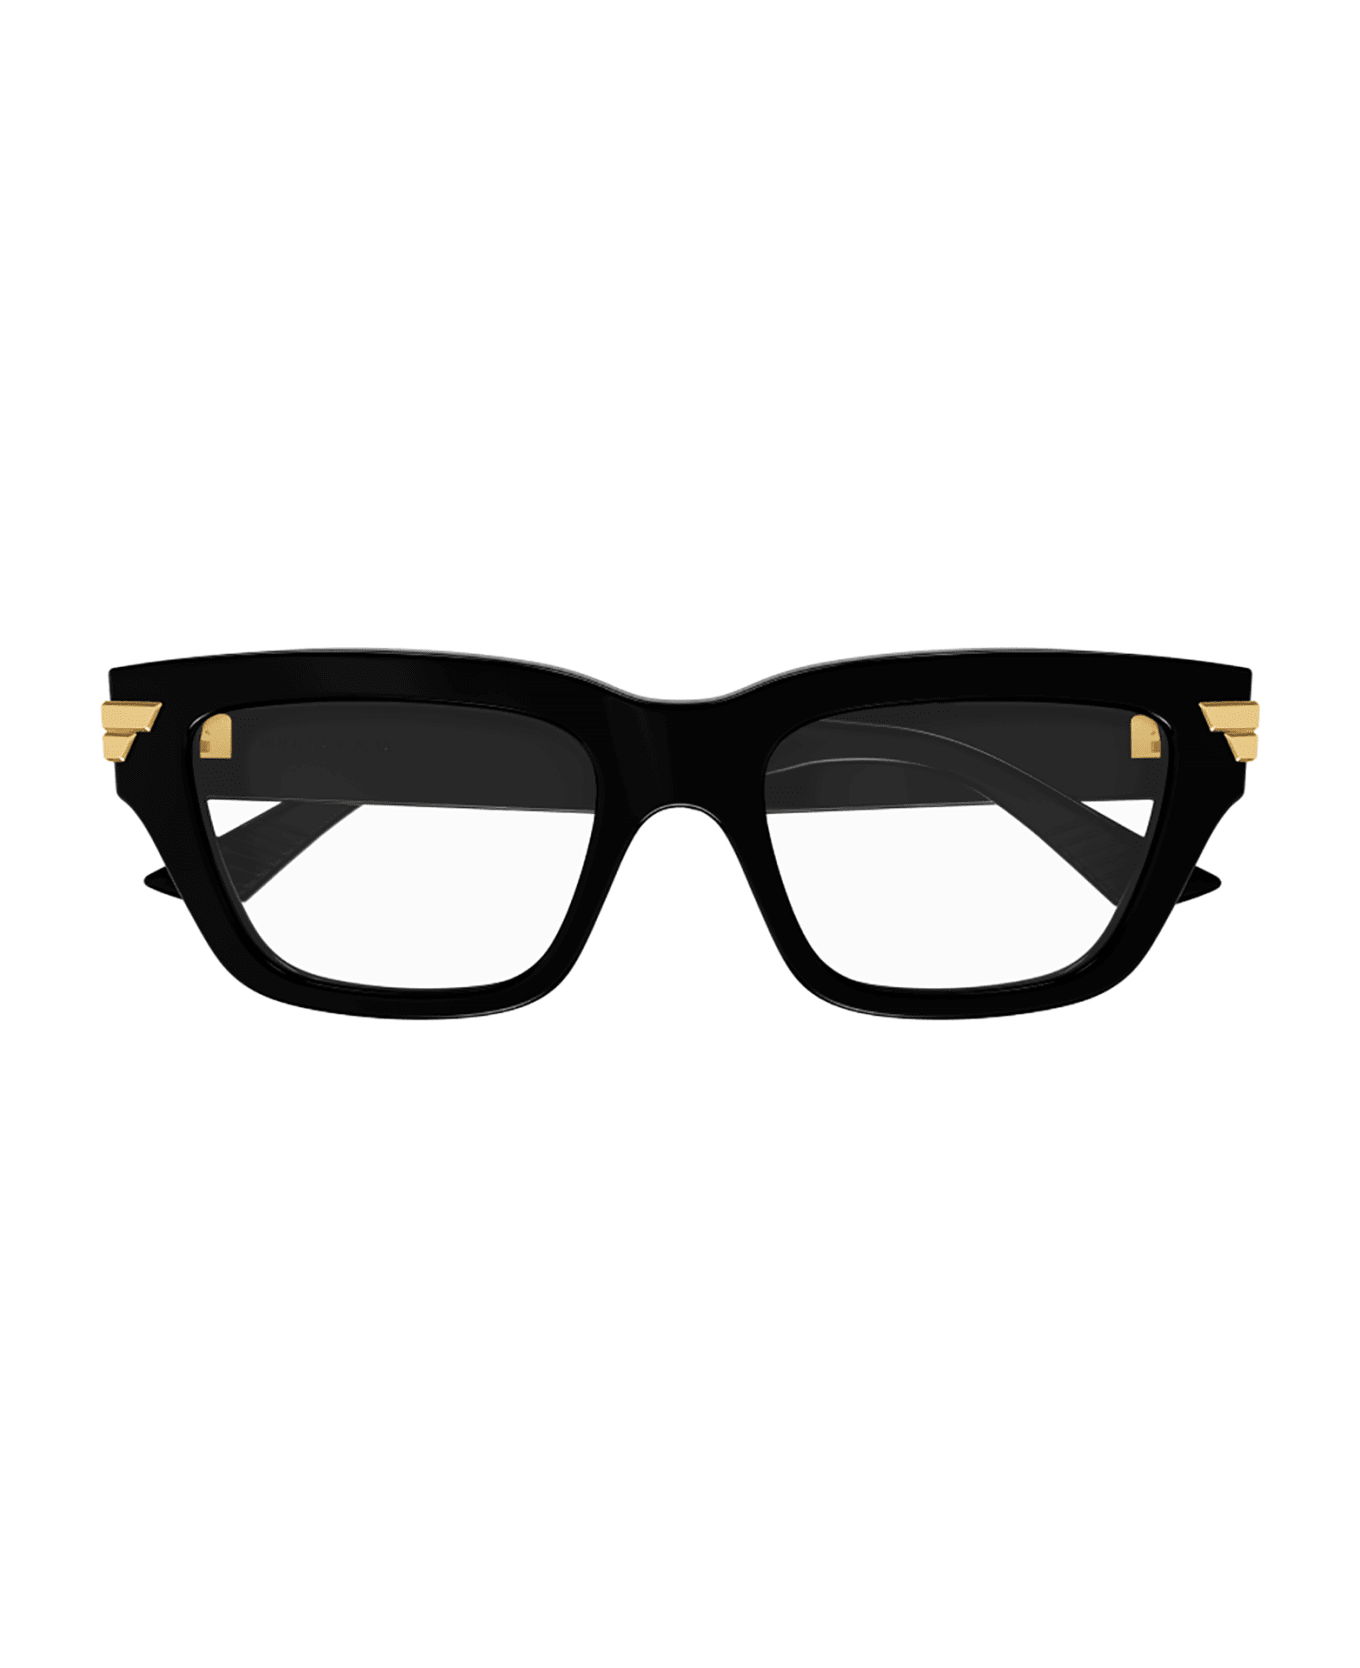 Bottega Veneta Eyewear 1e6n4id0a Glasses - 001 black black transpare